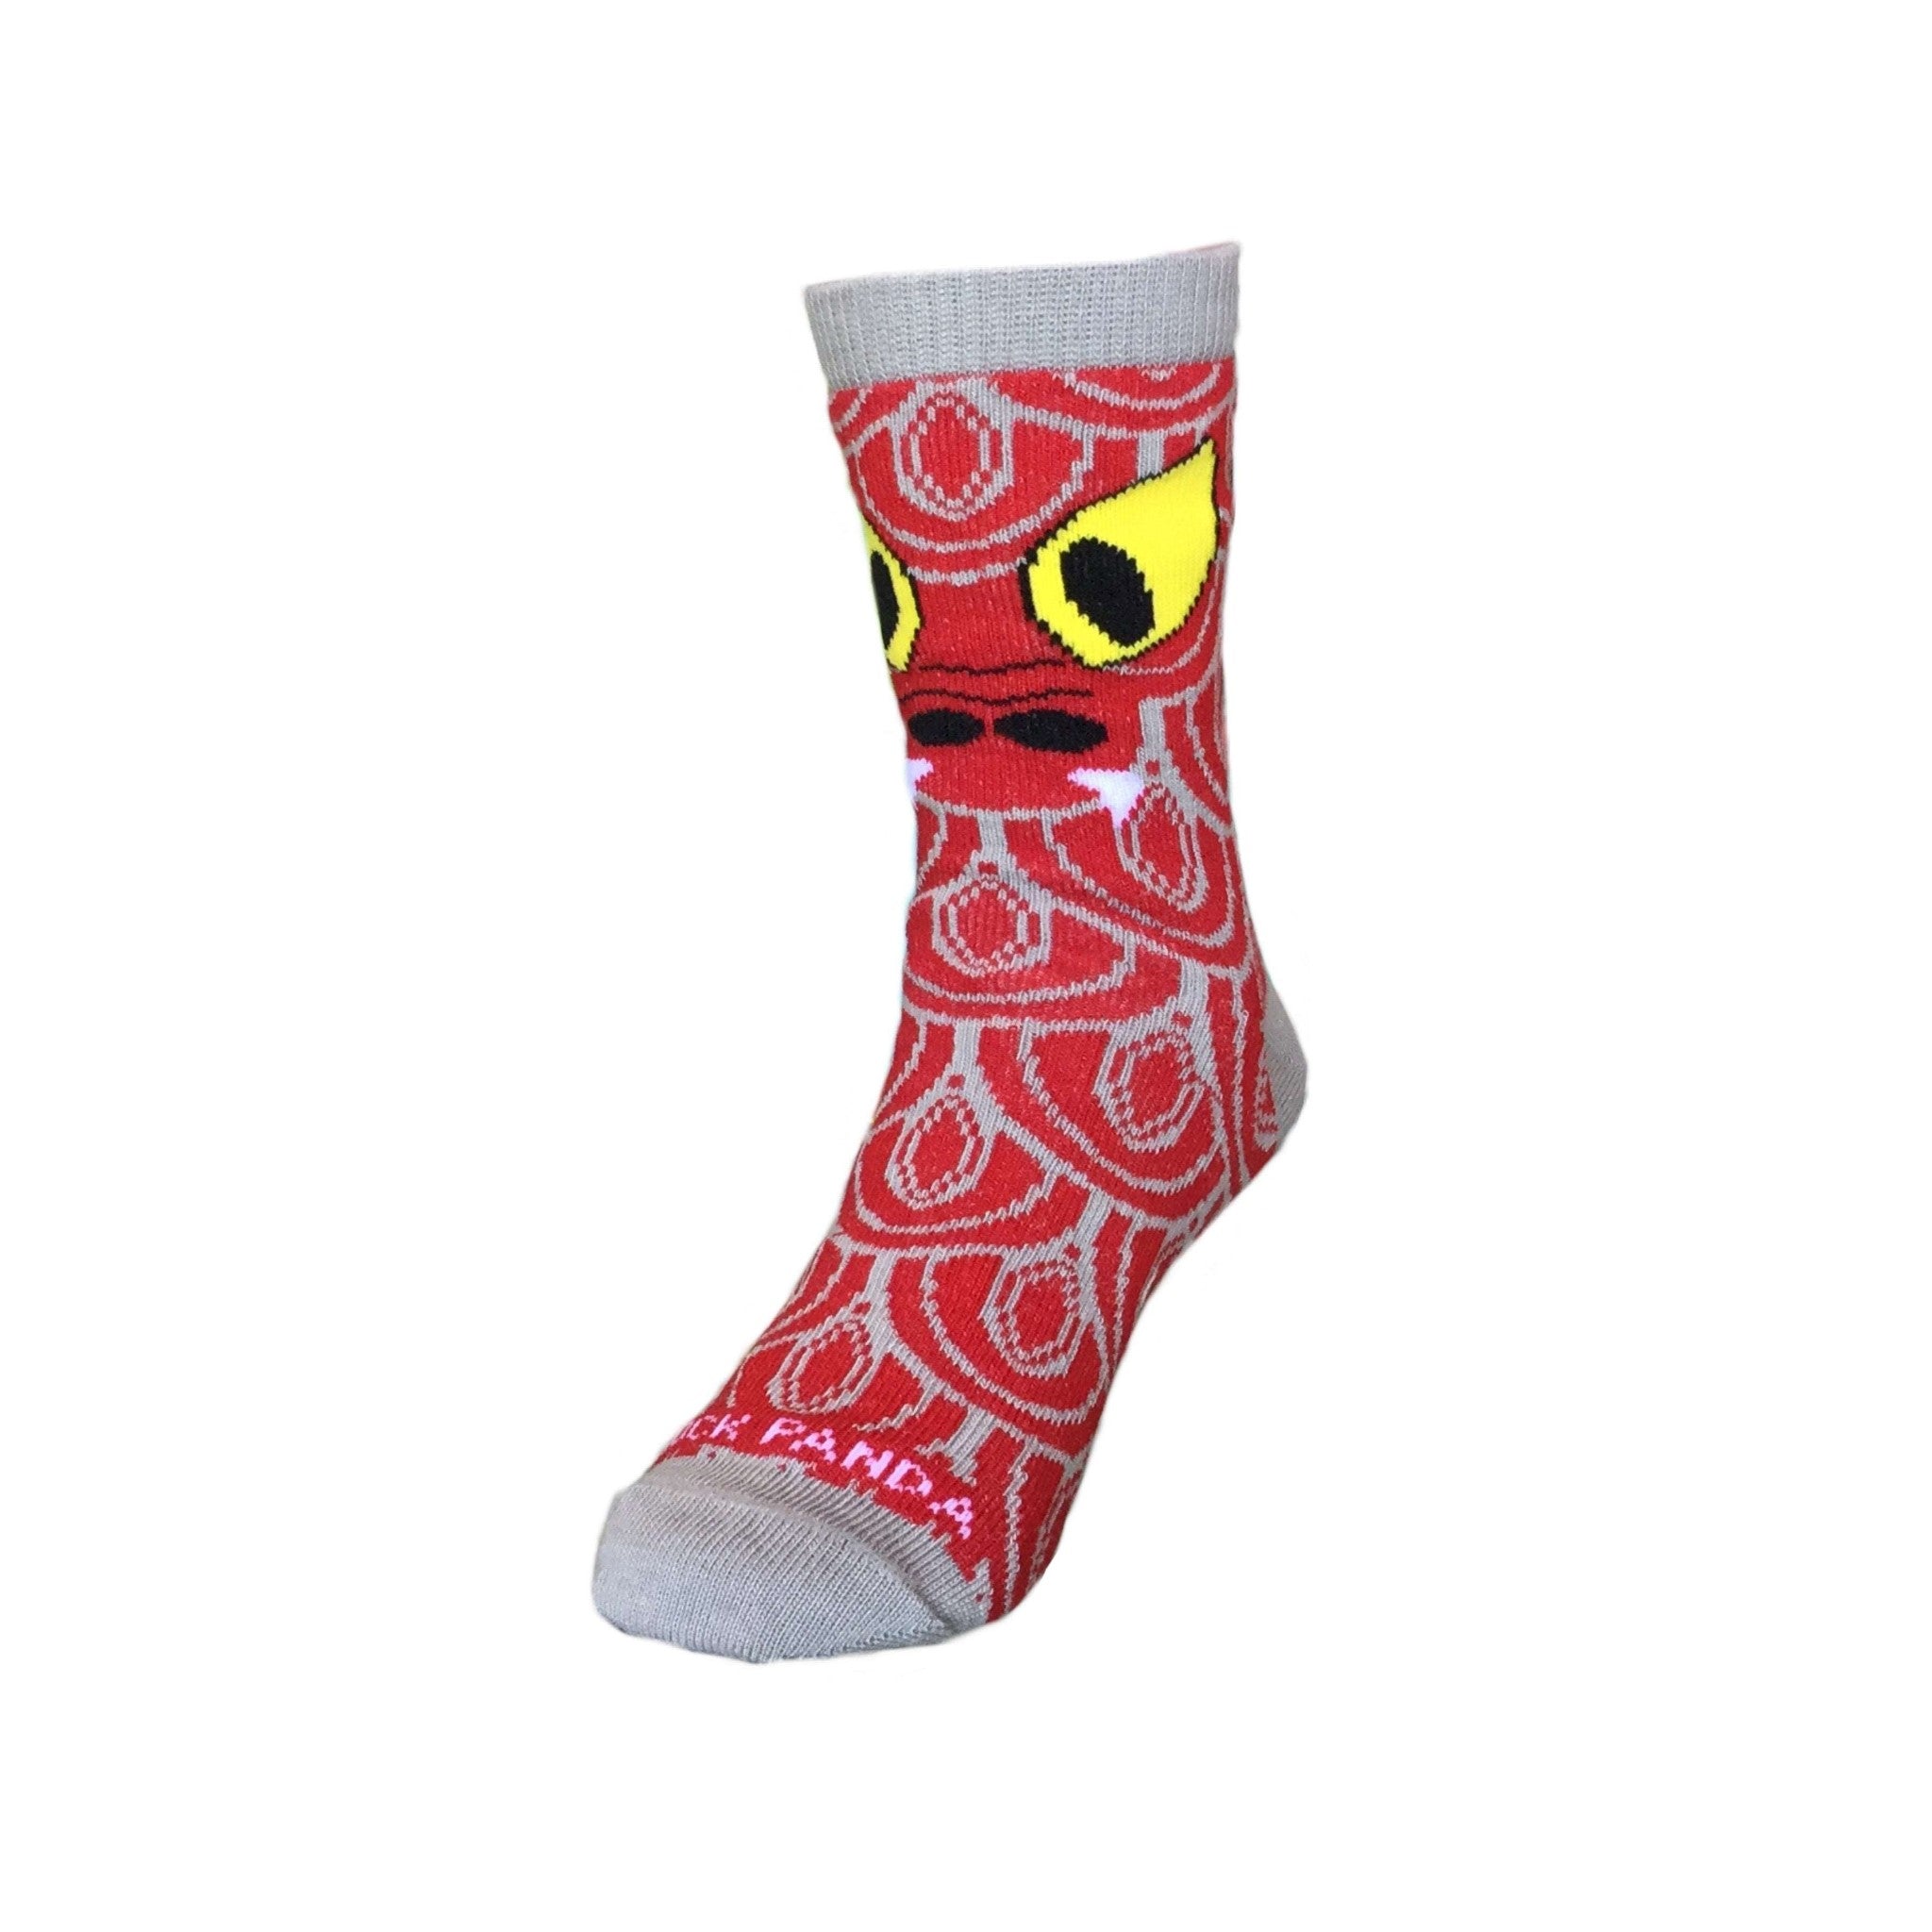 Drago the Fierce Red Dragon Socks (Ages 0-7)